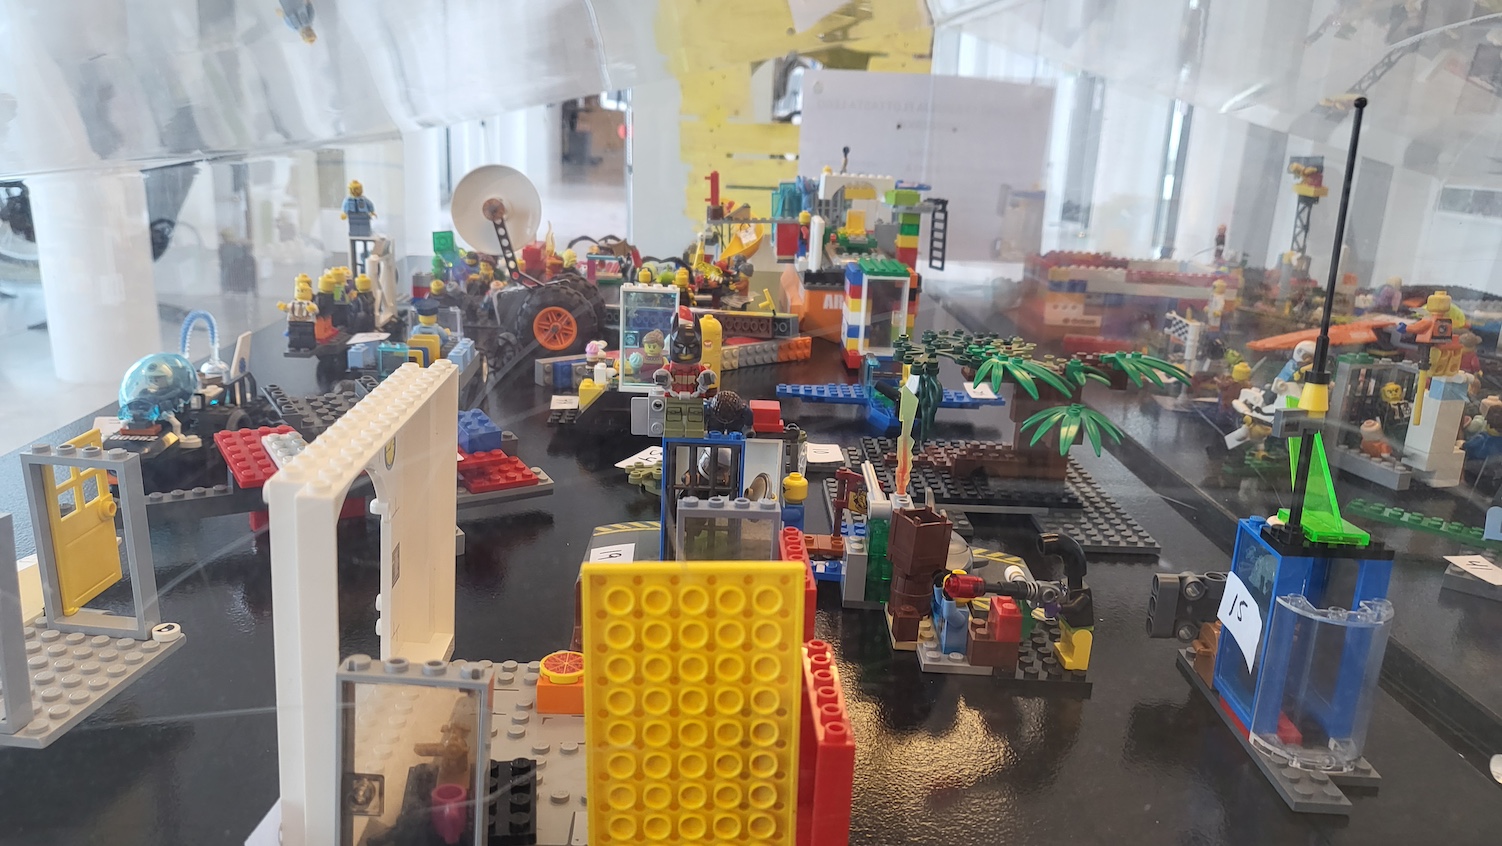 Lego-artwork on display